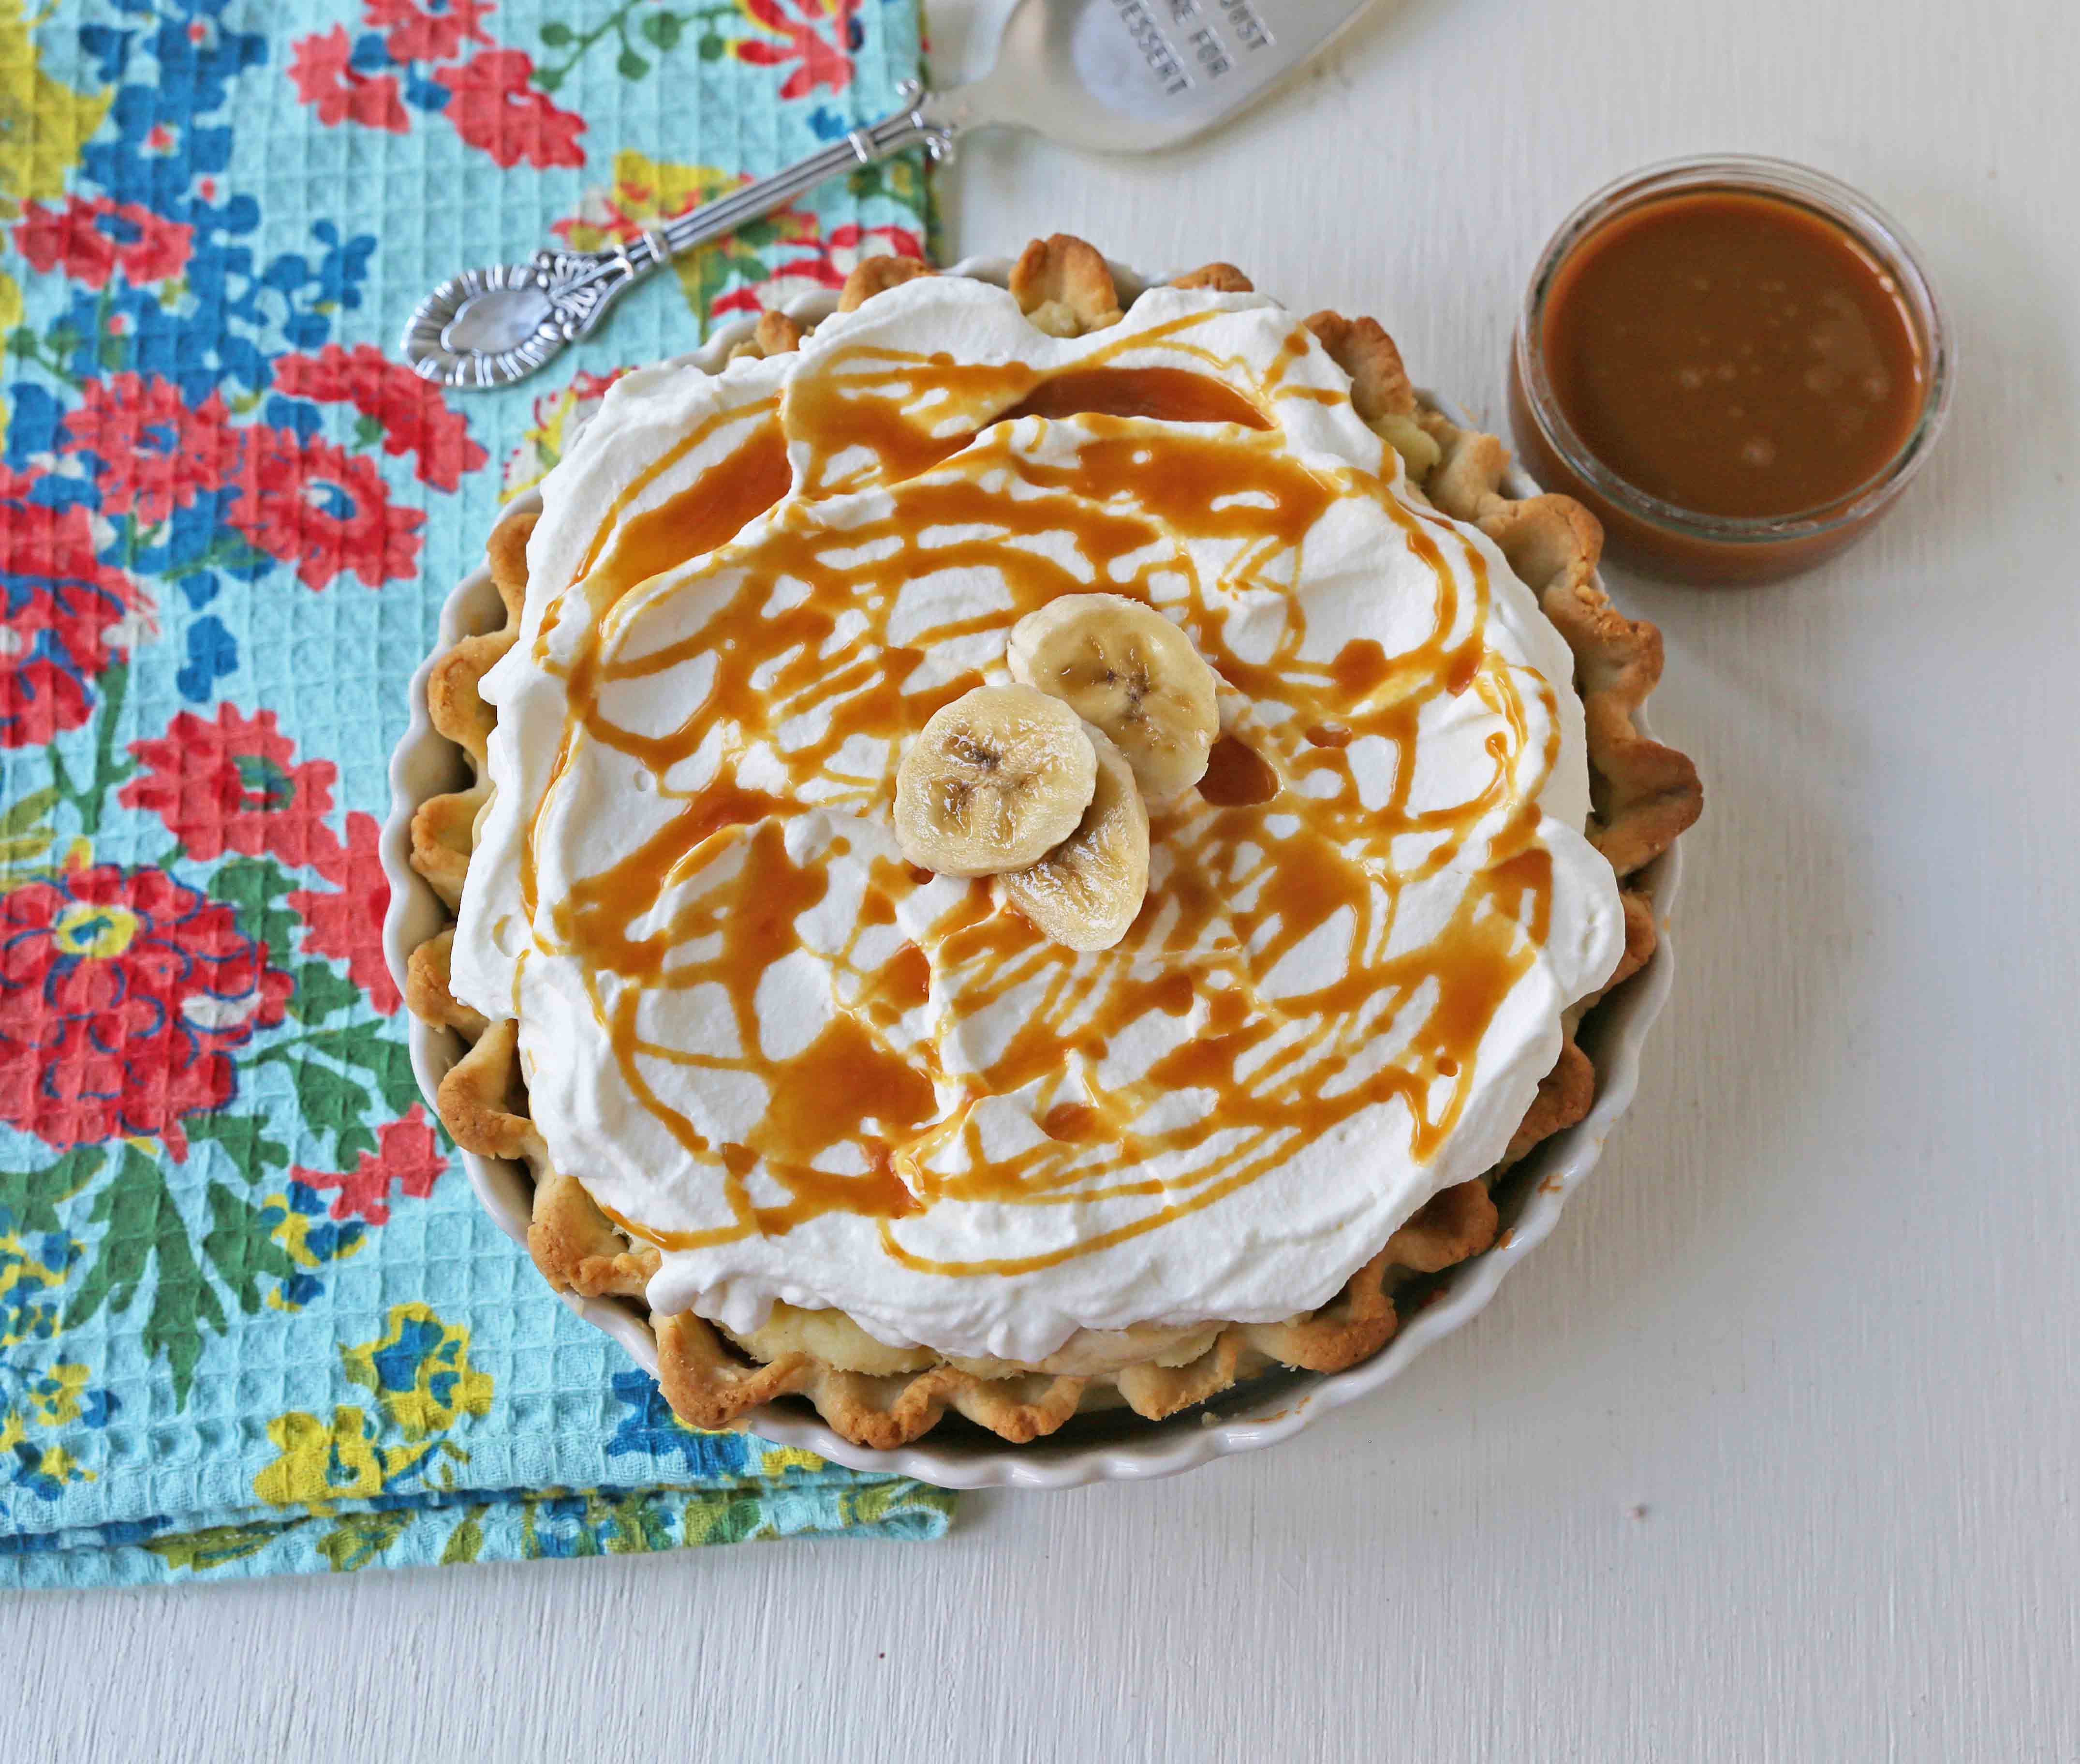 Salted Caramel Banana Cream Pie. Homemade banana cream pie with salted caramel. www.modernhoney.com #bananacreampie #caramelbananacreampie #thanksgivingpie #thanksgiving #pie #pierecipes